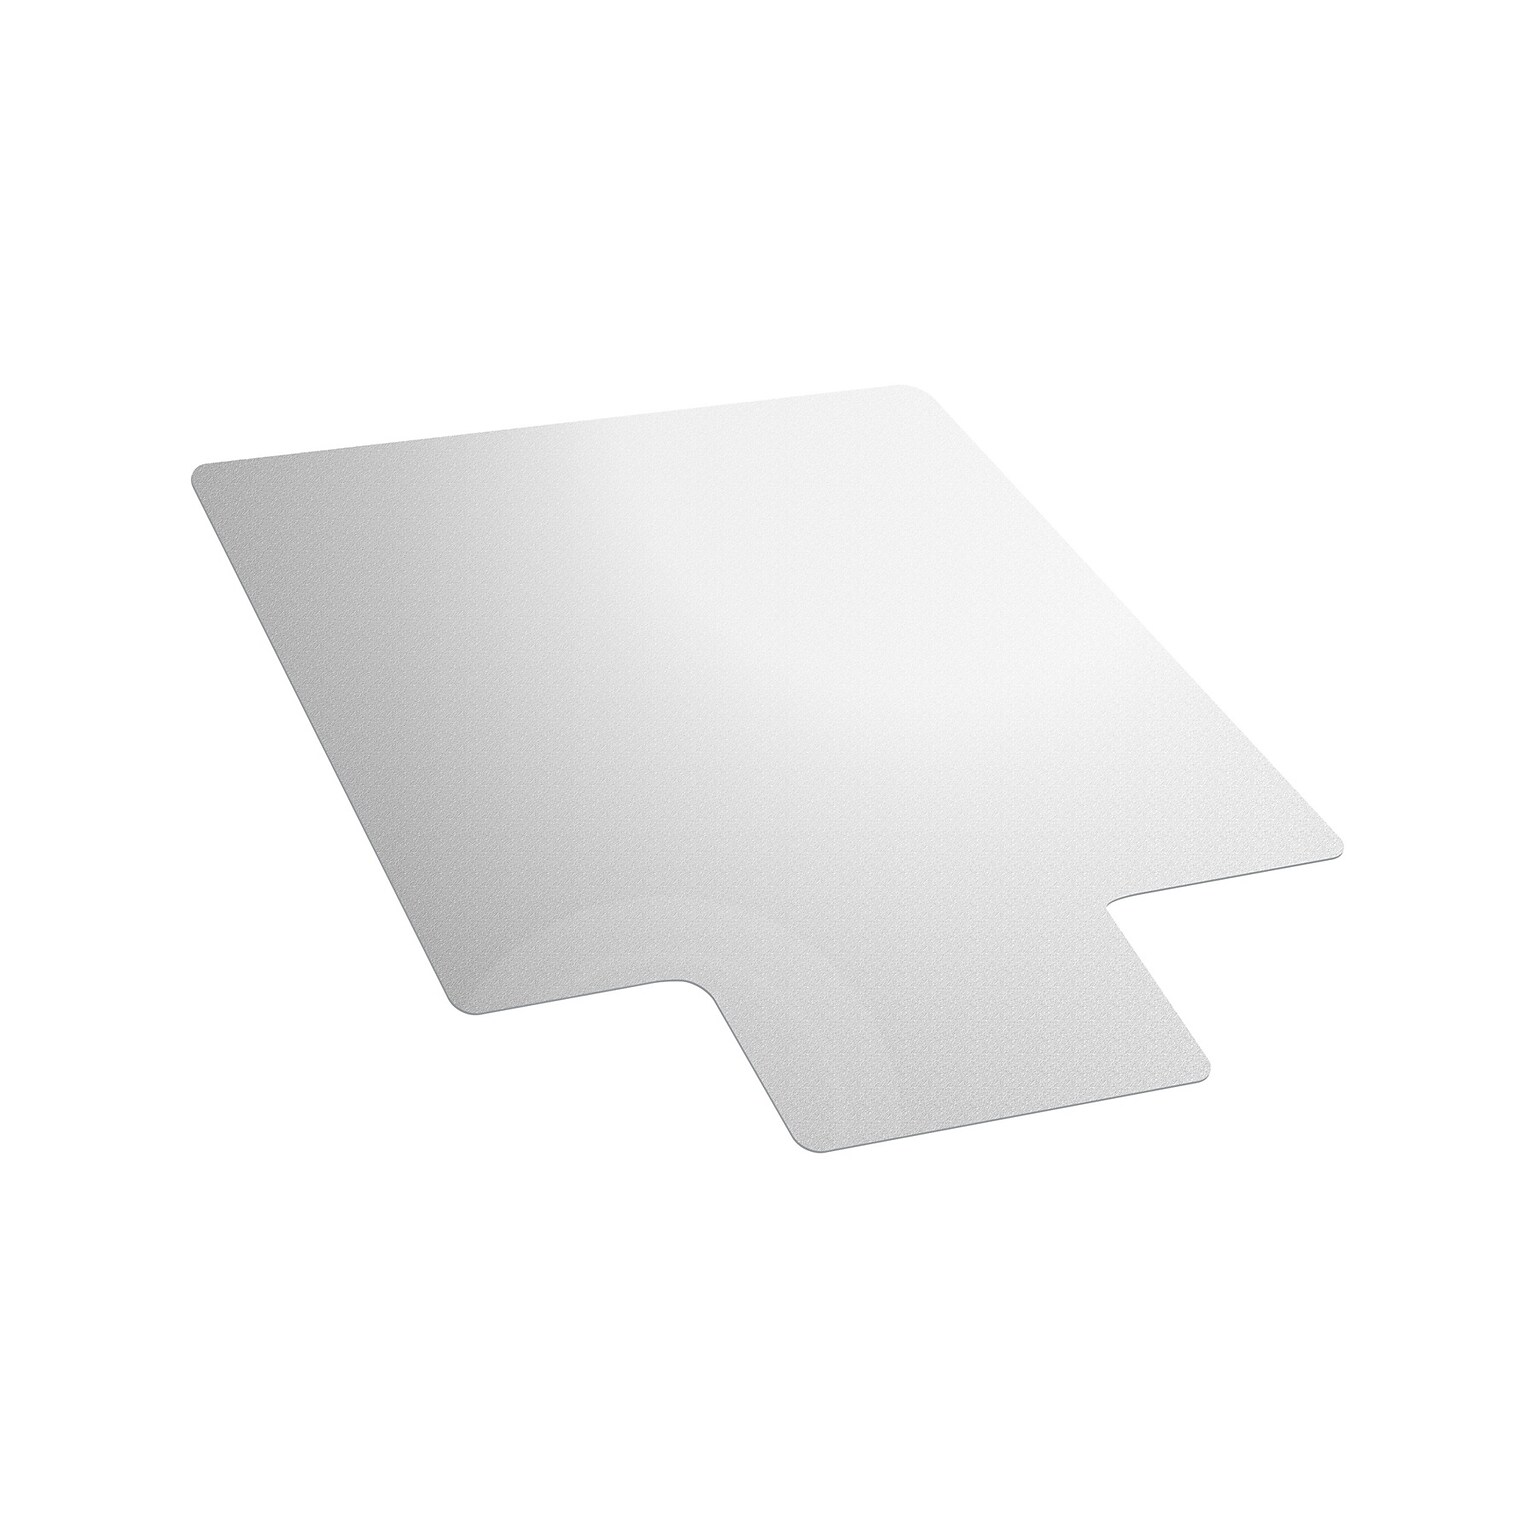 Floortex Cleartex Enhanced Polymer Hard Floor Chair Mat with Lip, Rectangular, 36 x 48, Clear (FCECO123648LP)